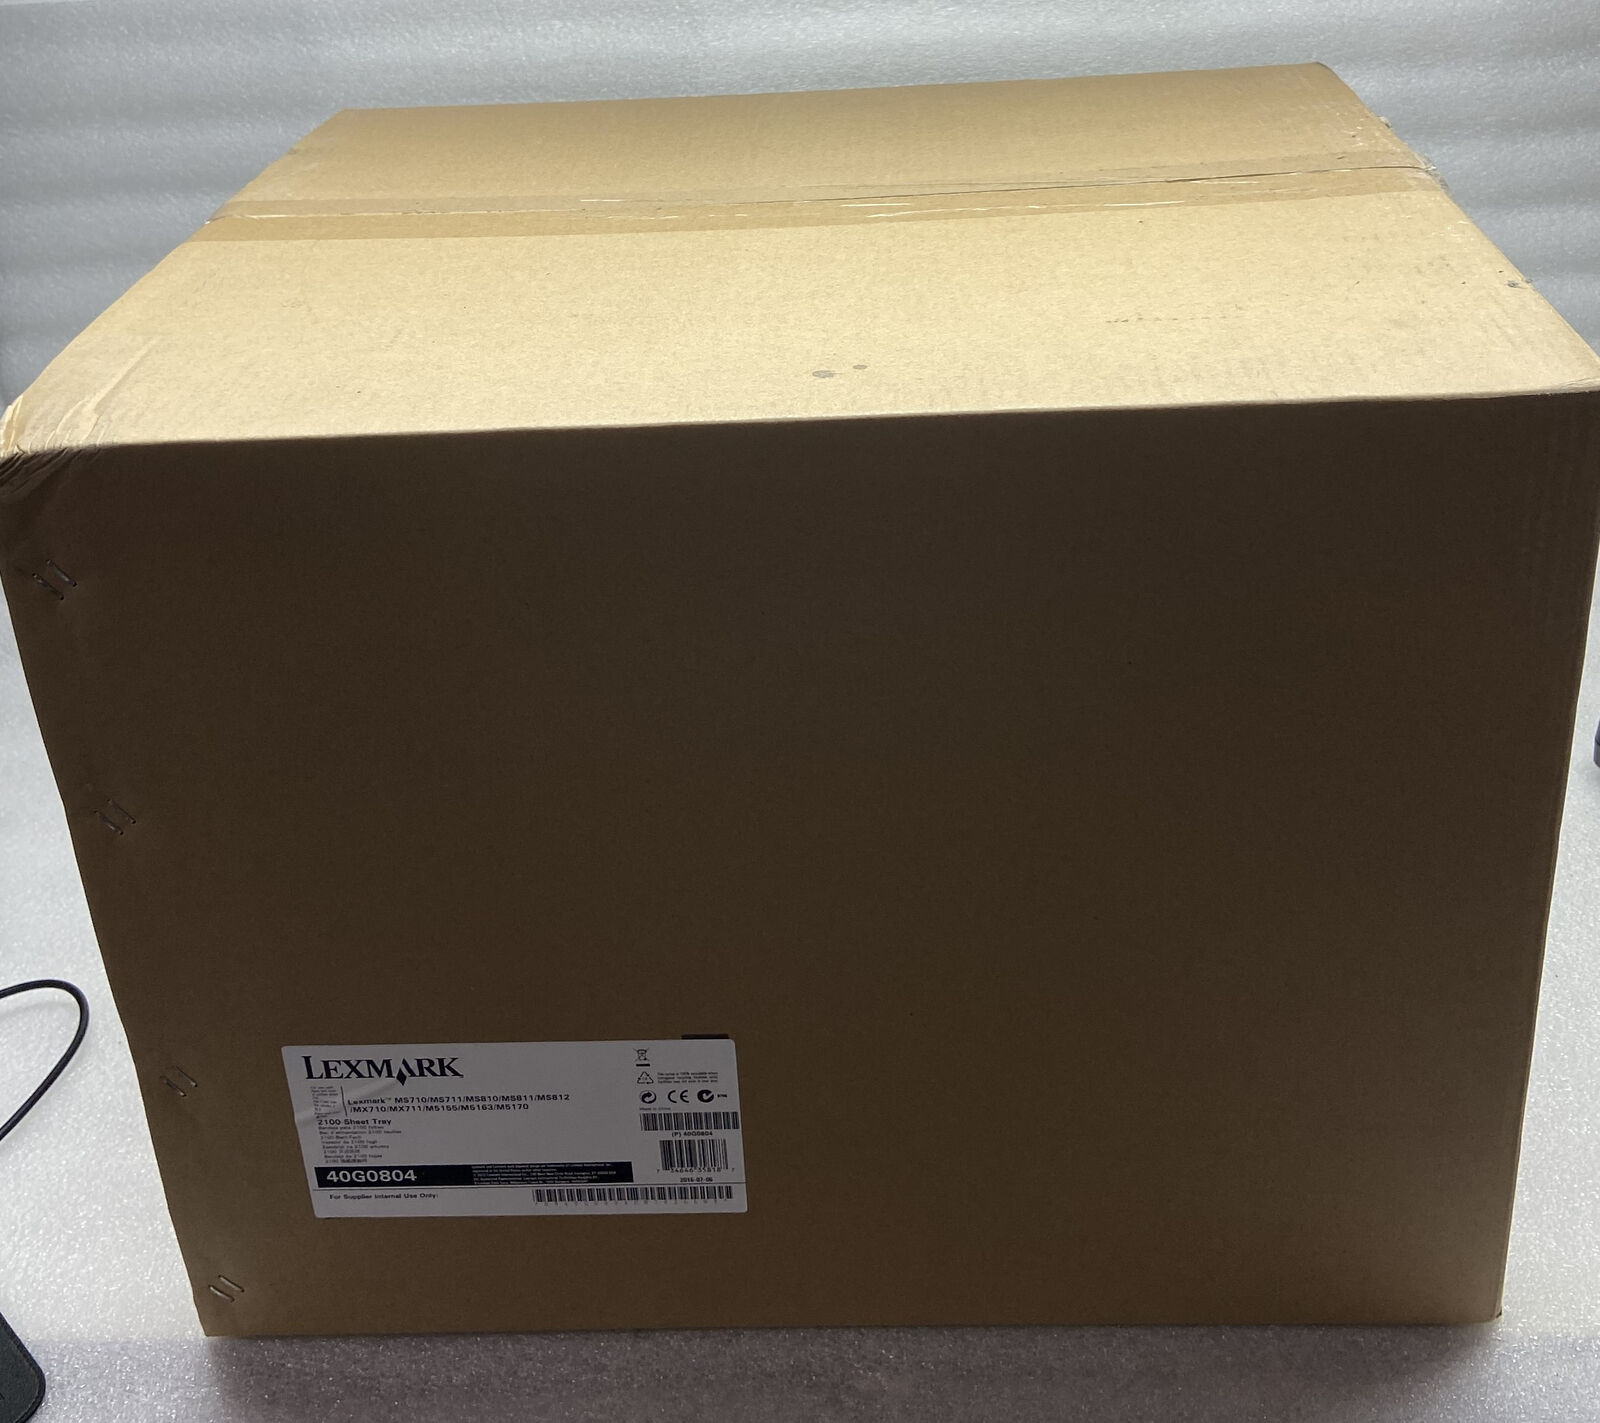 New Lexmark 40G0804 High Capacity 2100 Sheet Paper TRAY MS710 MS711 MS810 MX710